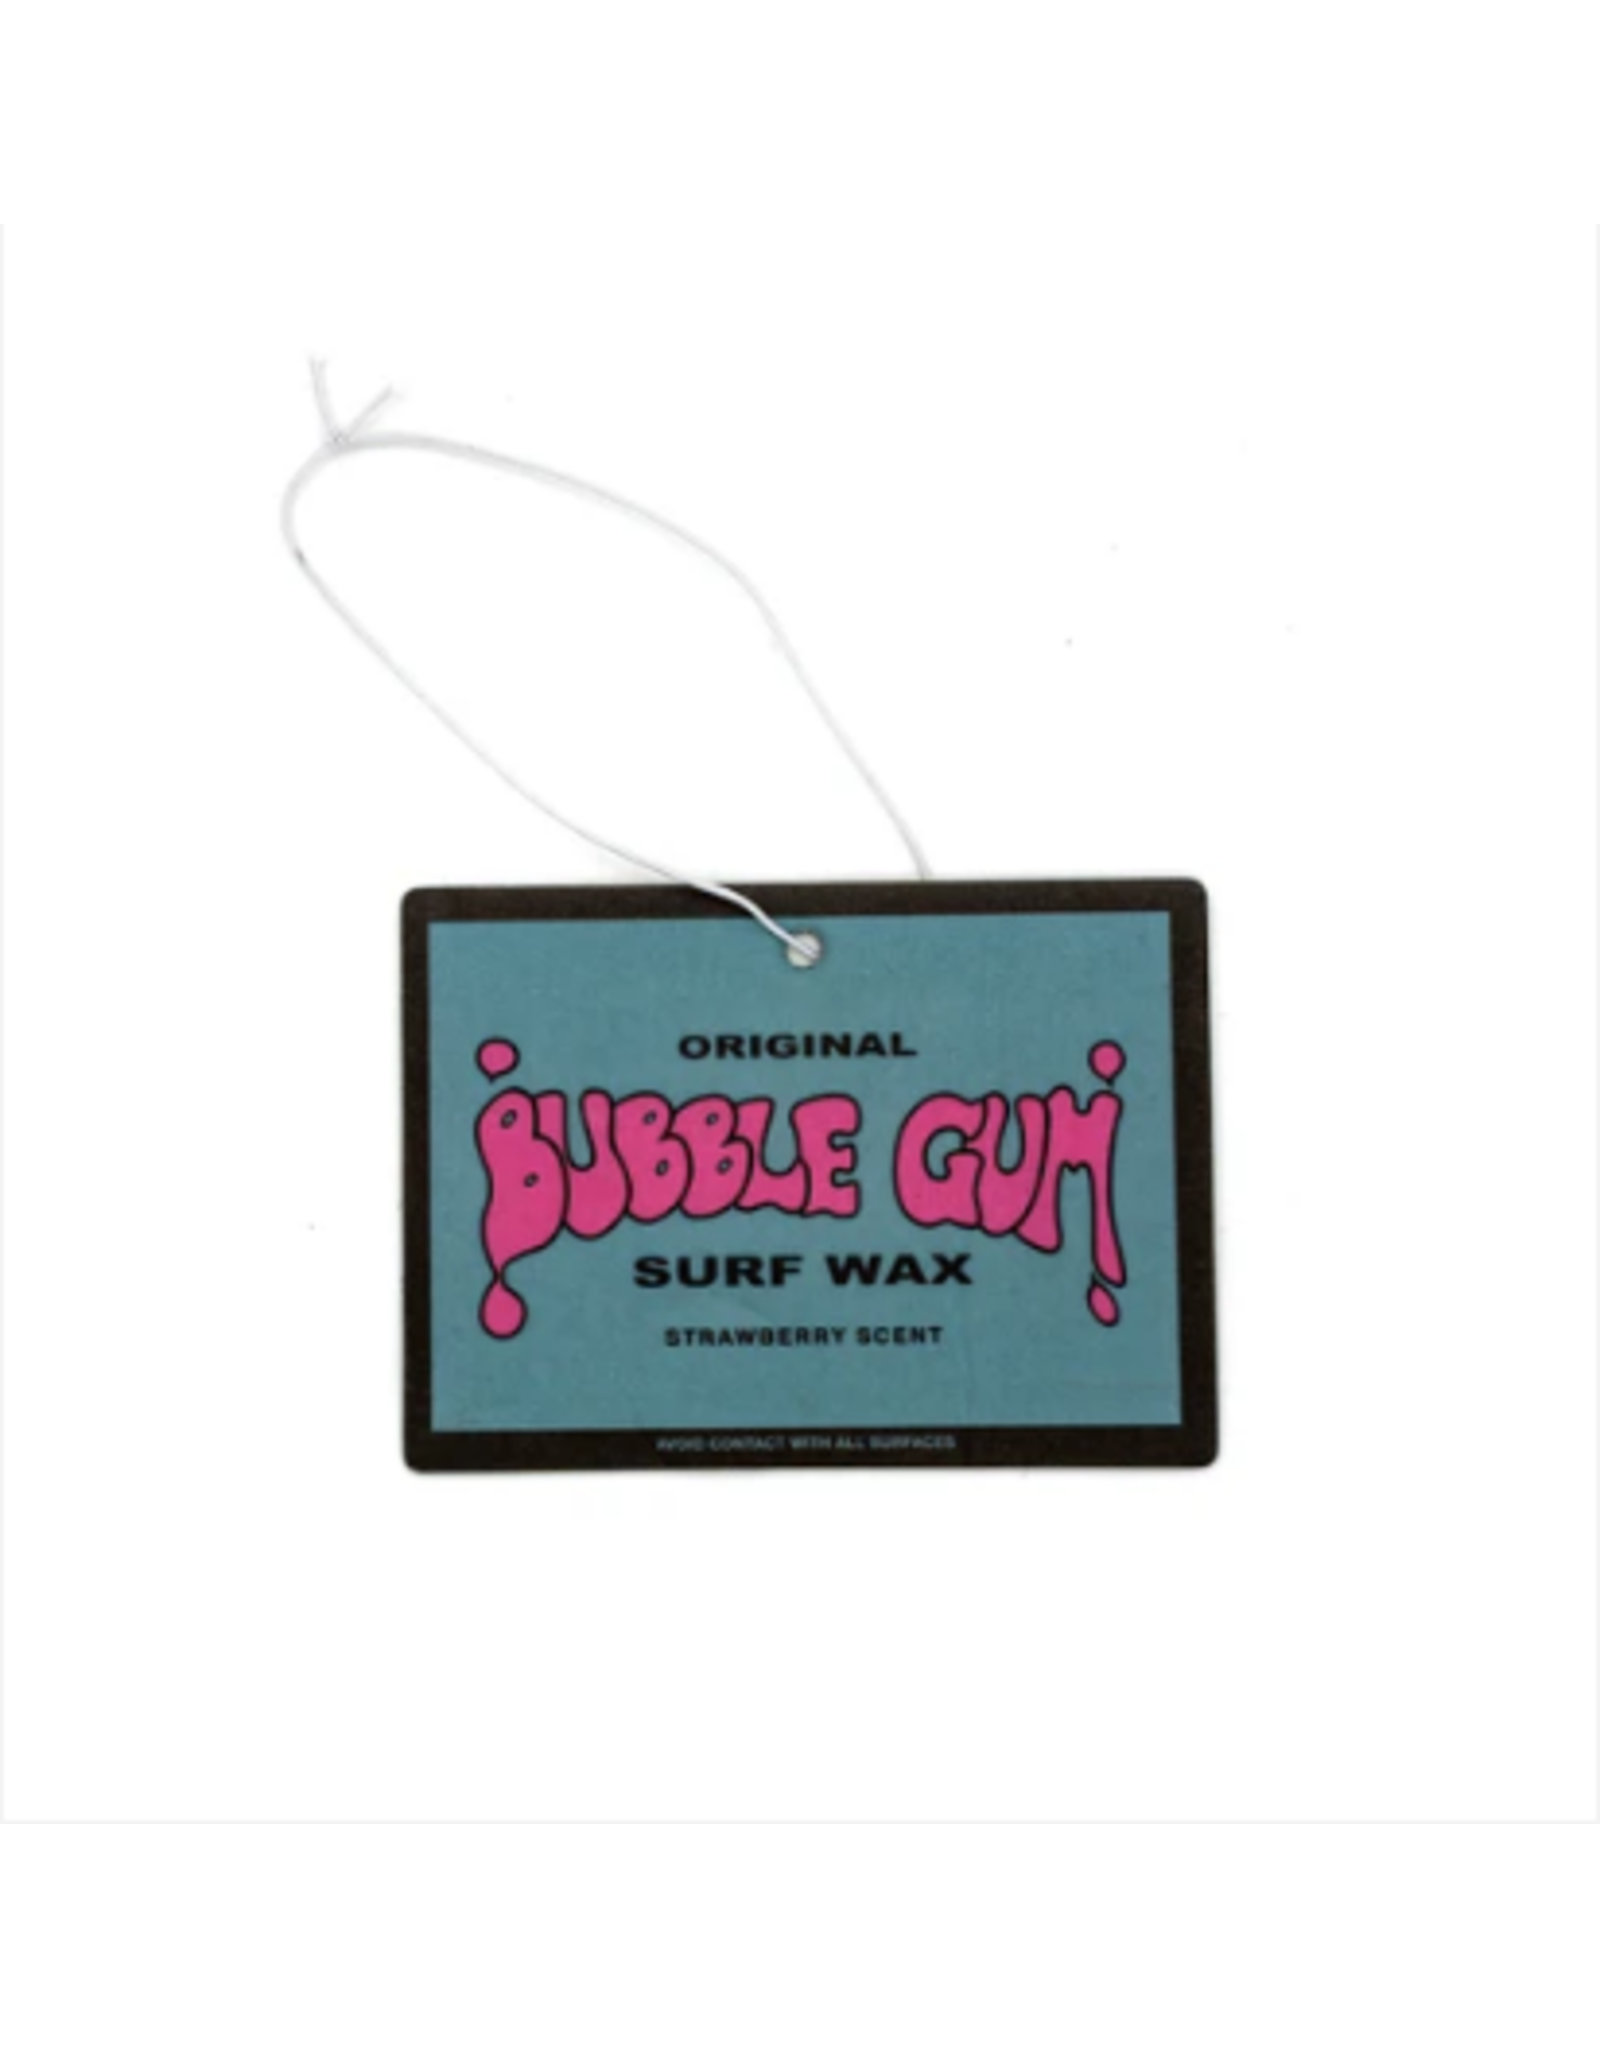 BUBBLE GUM Bubble Gum Surf Wax Air Freshener - Strawberry